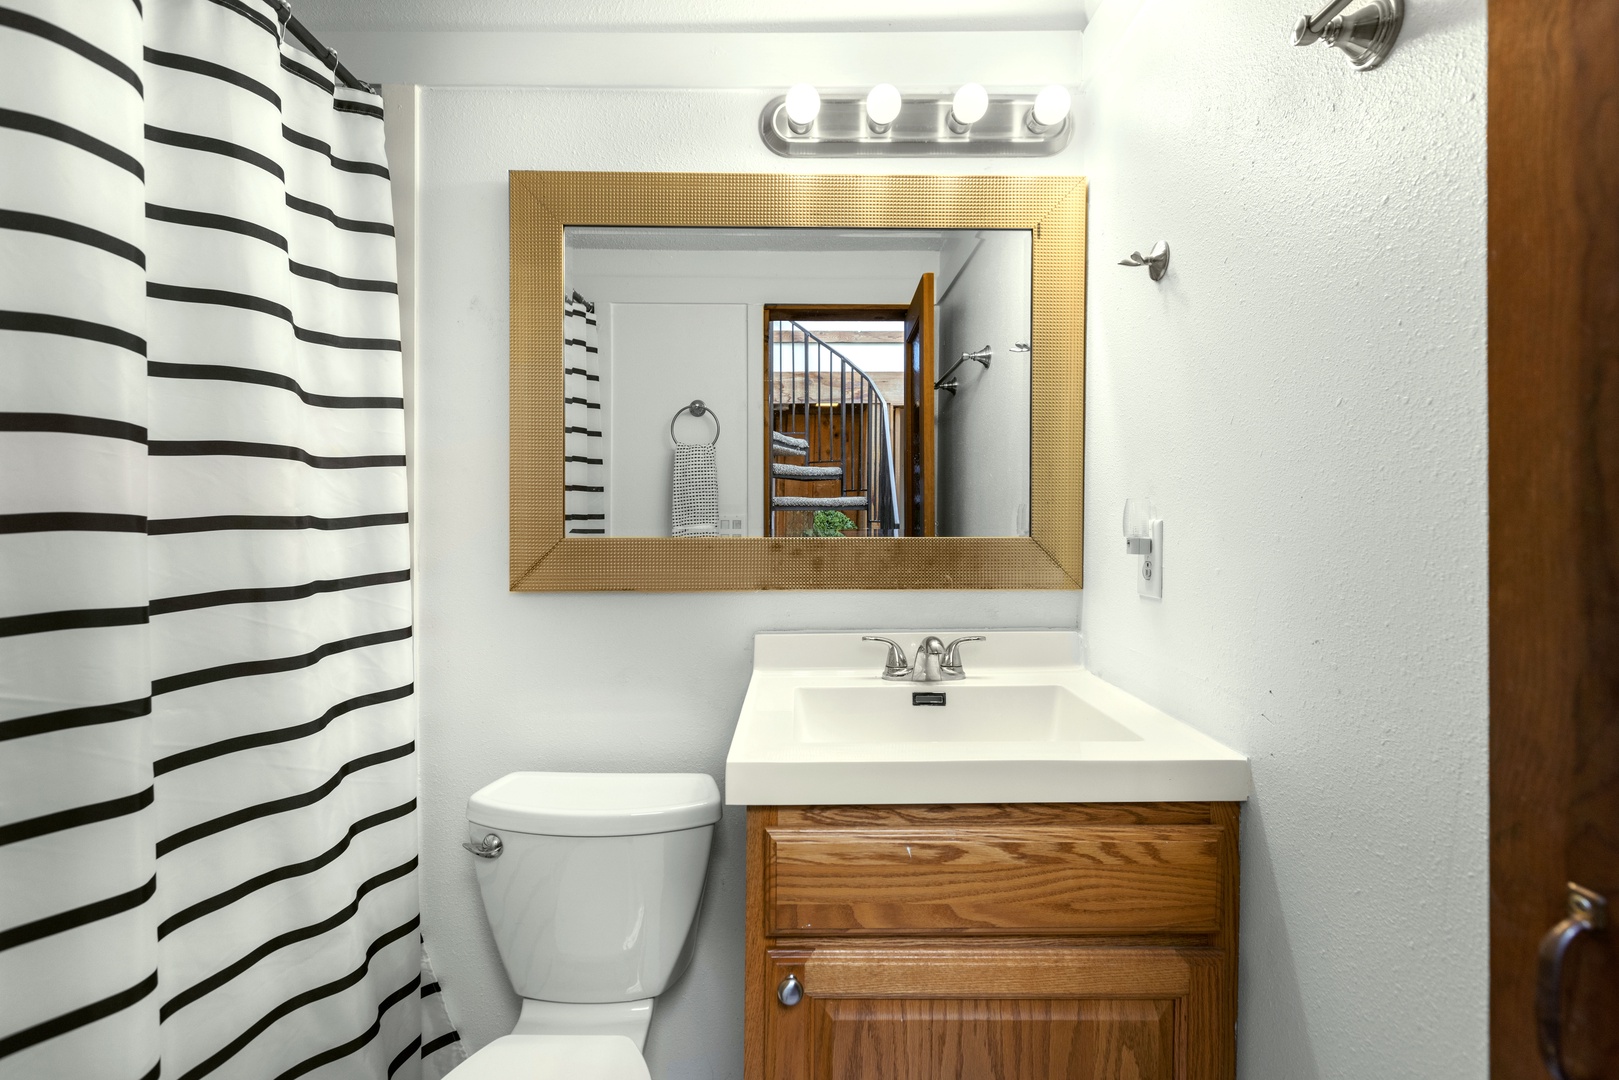 A single vanity & walk-in shower await in this full bathroom